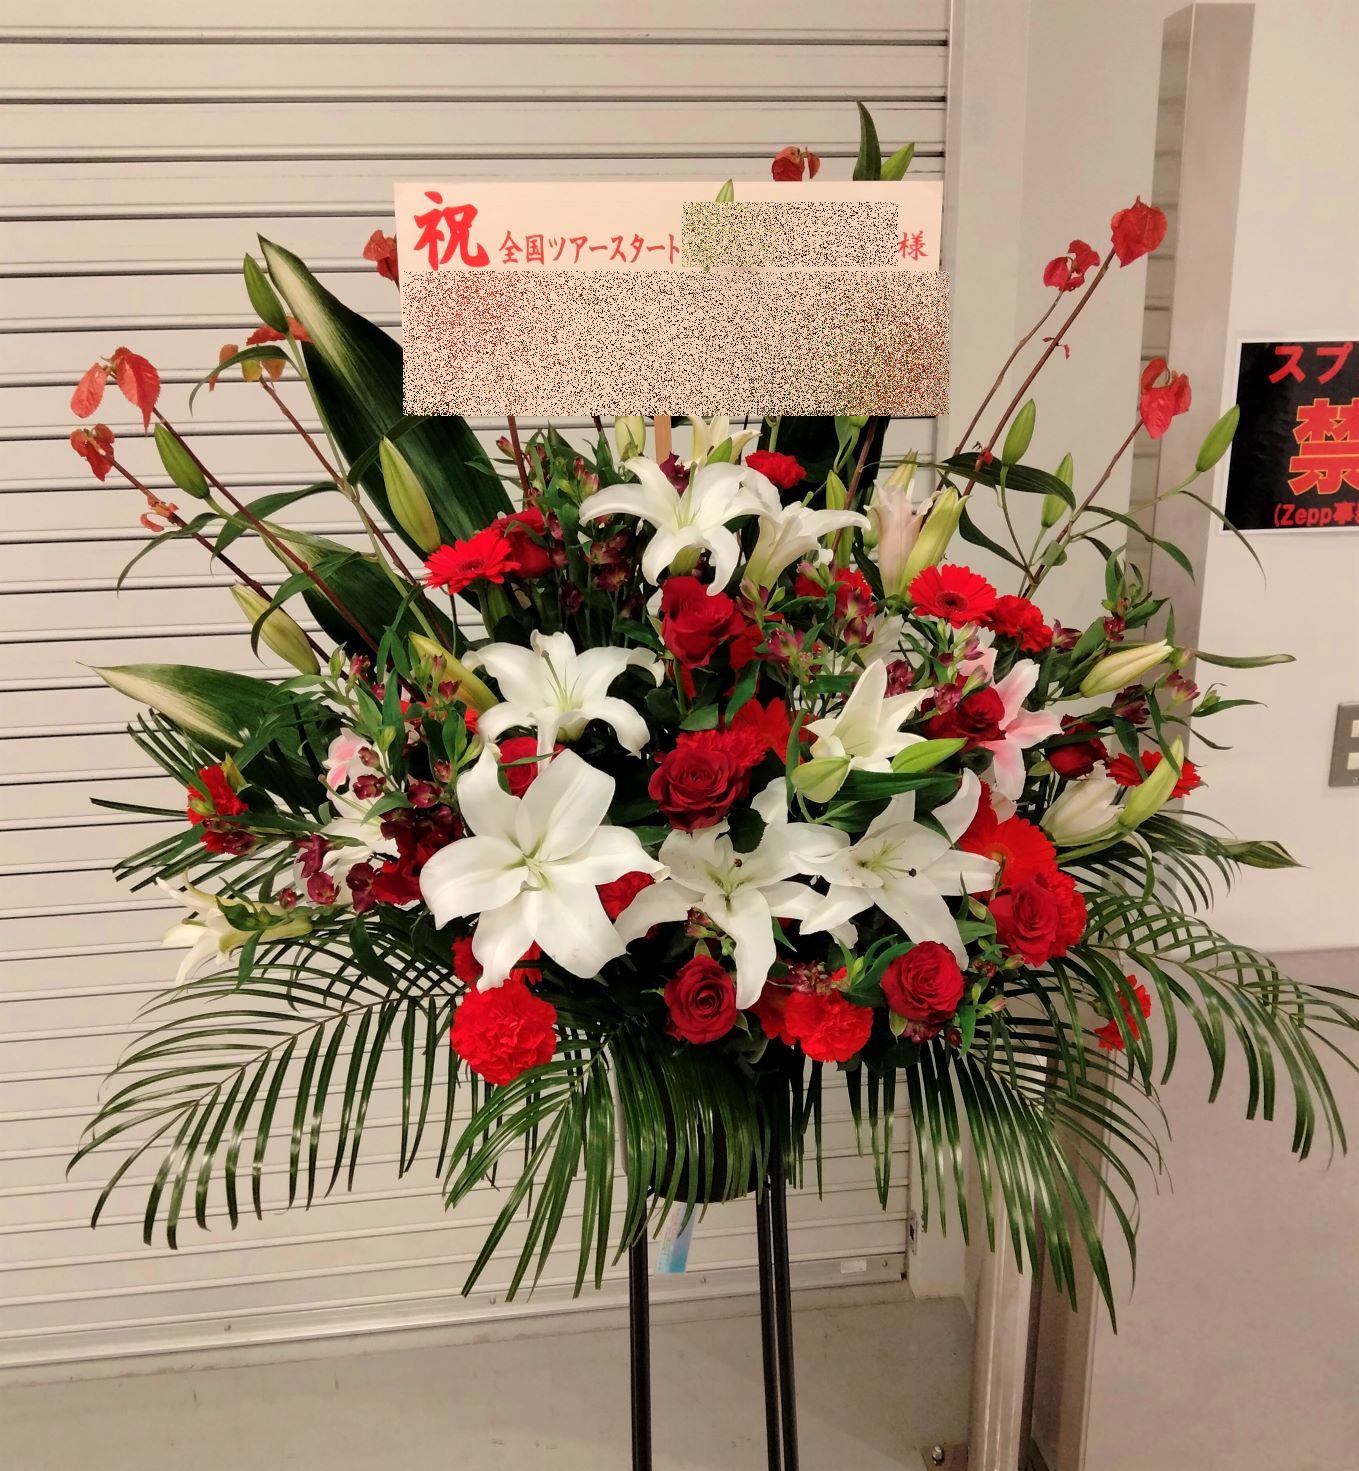 Zepp横浜へスタンド花を即日当日配達しました。【横浜花屋の花束・スタンド花・胡蝶蘭・バルーン・アレンジメント配達事例890】